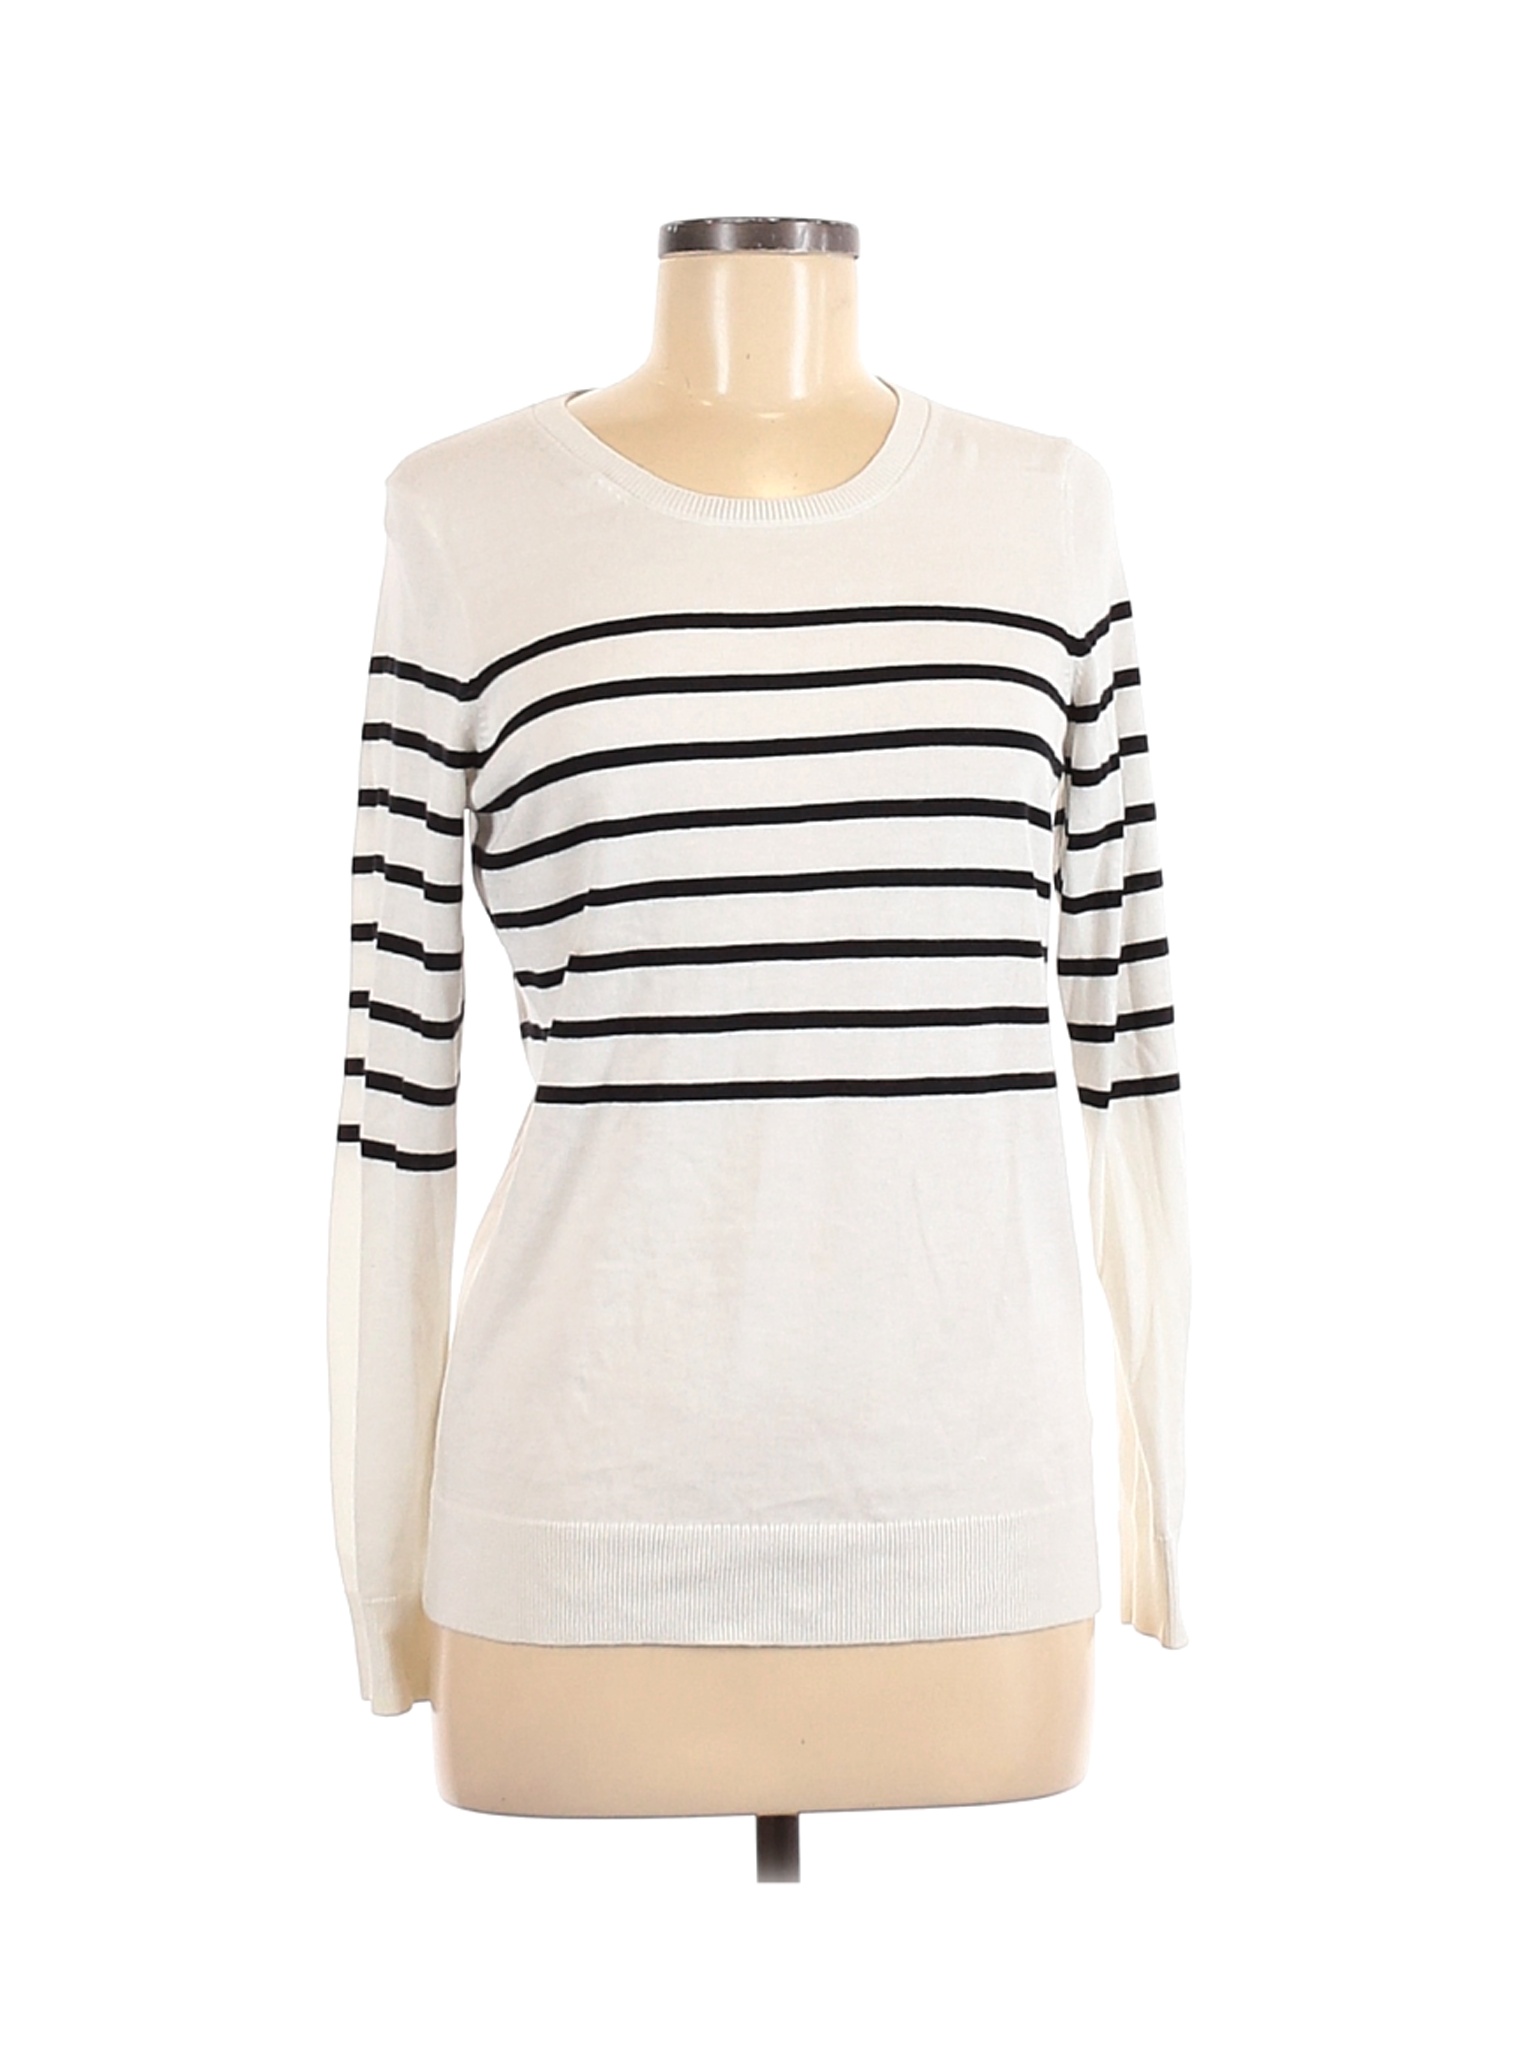 Amazon Essentials Women White Pullover Sweater M | eBay